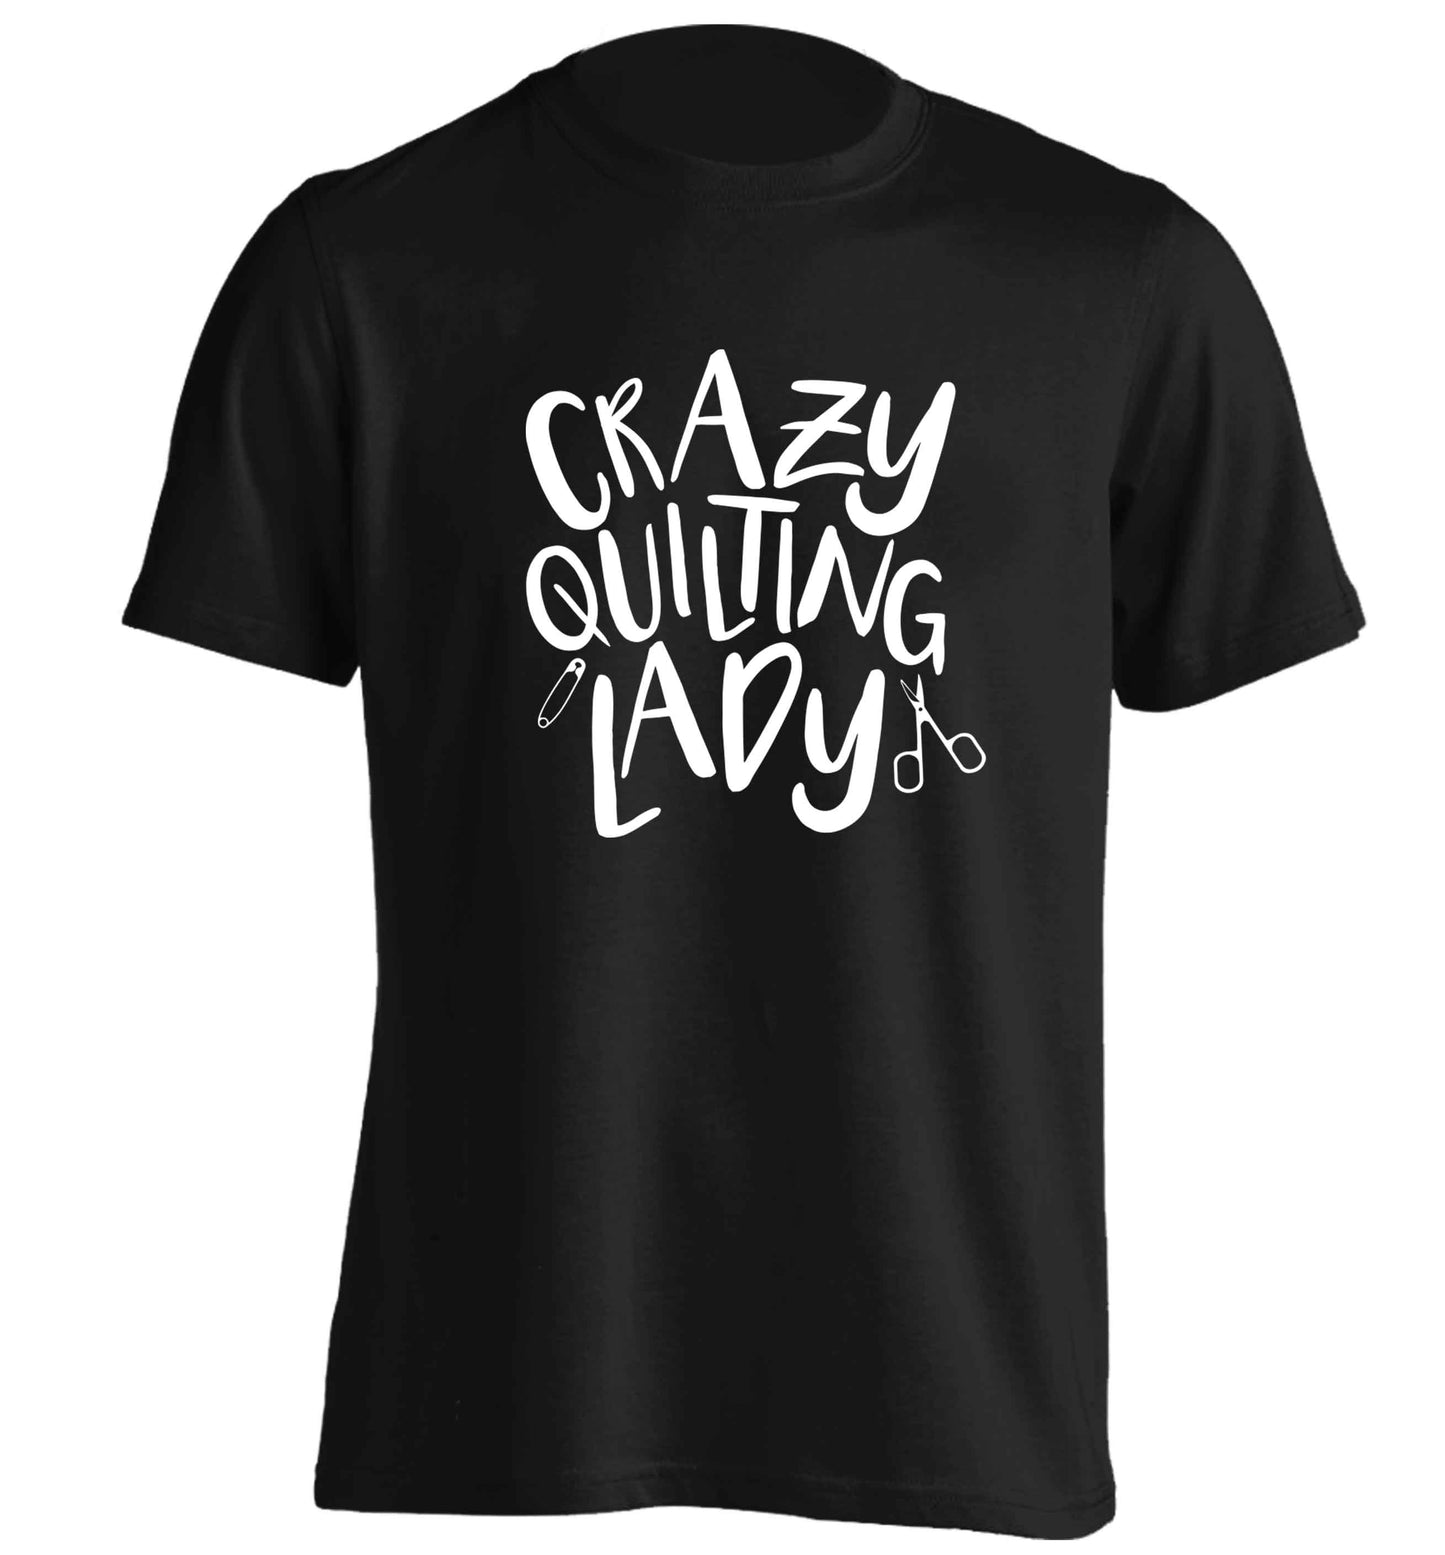 Crazy quilting lady adults unisex black Tshirt 2XL